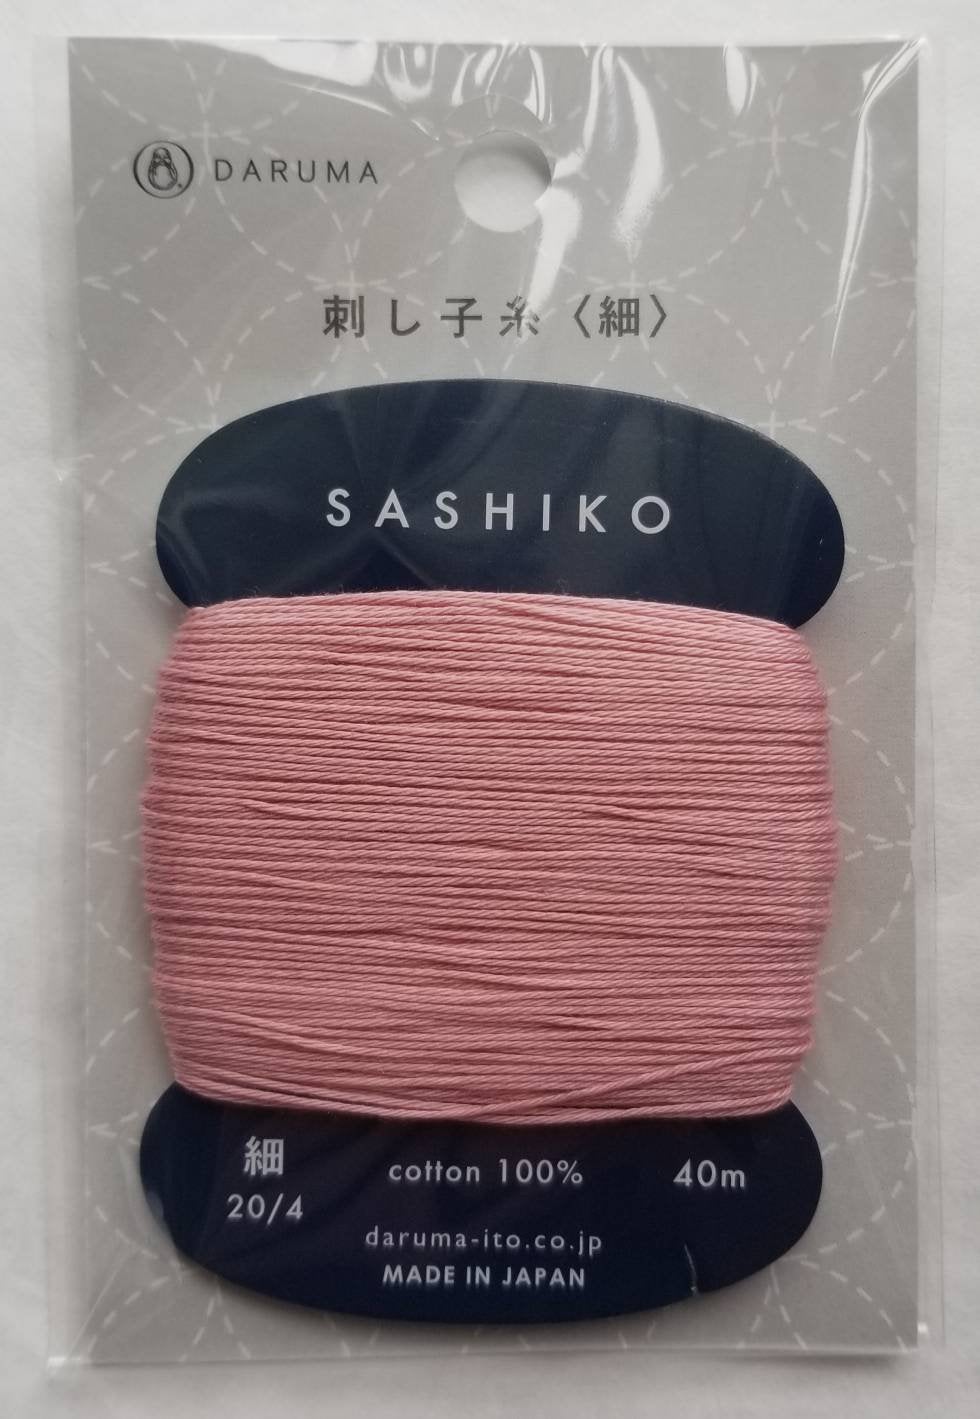 Daruma #211 PLUM BLOSSOM Japanese Cotton SASHIKO thread 40 meter card 20/4 こうばい blossom pink